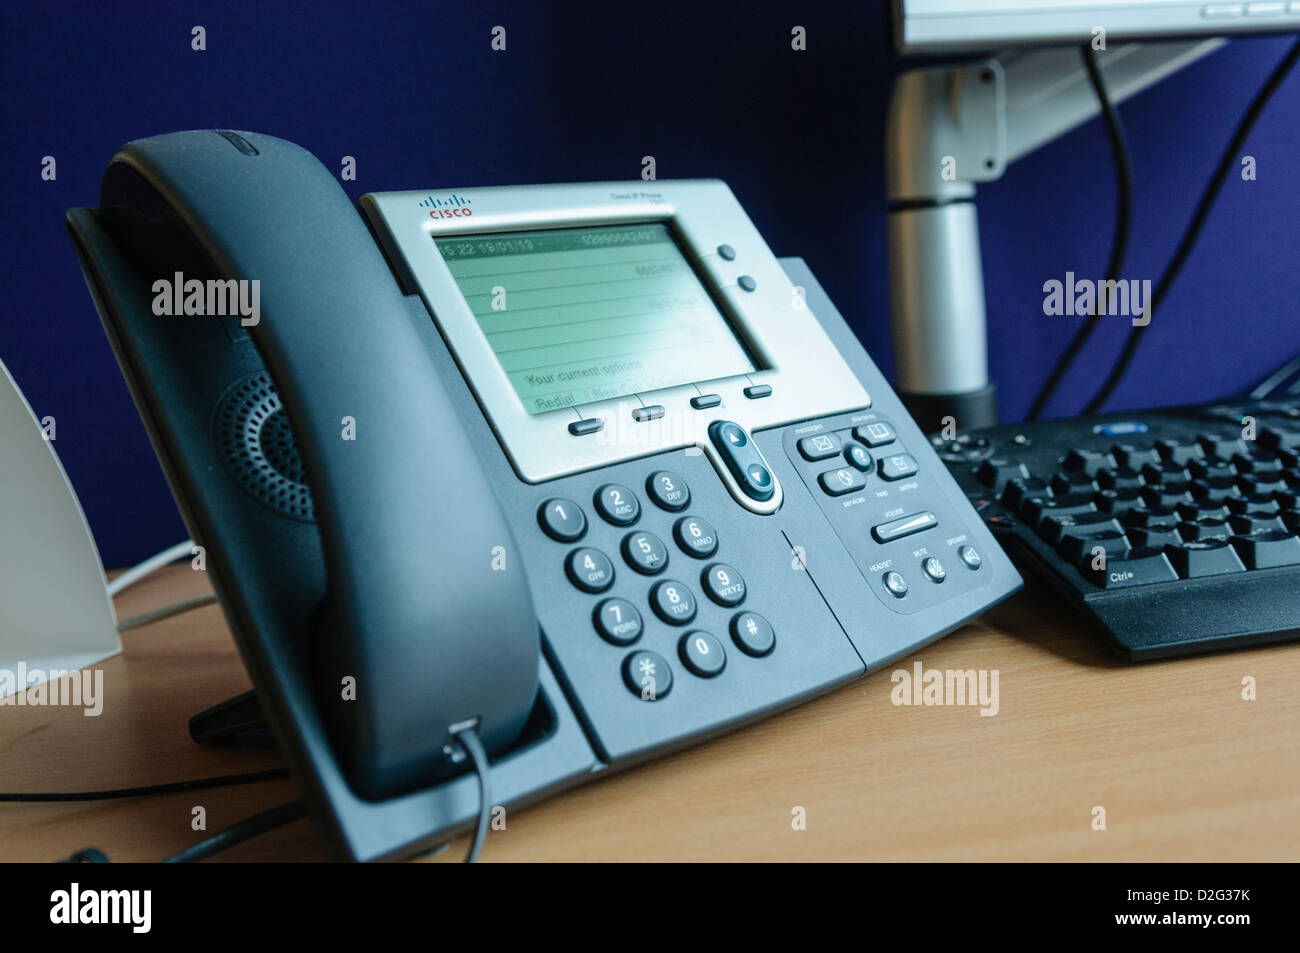 A Cisco IP telephone on an office desk Stock Photo